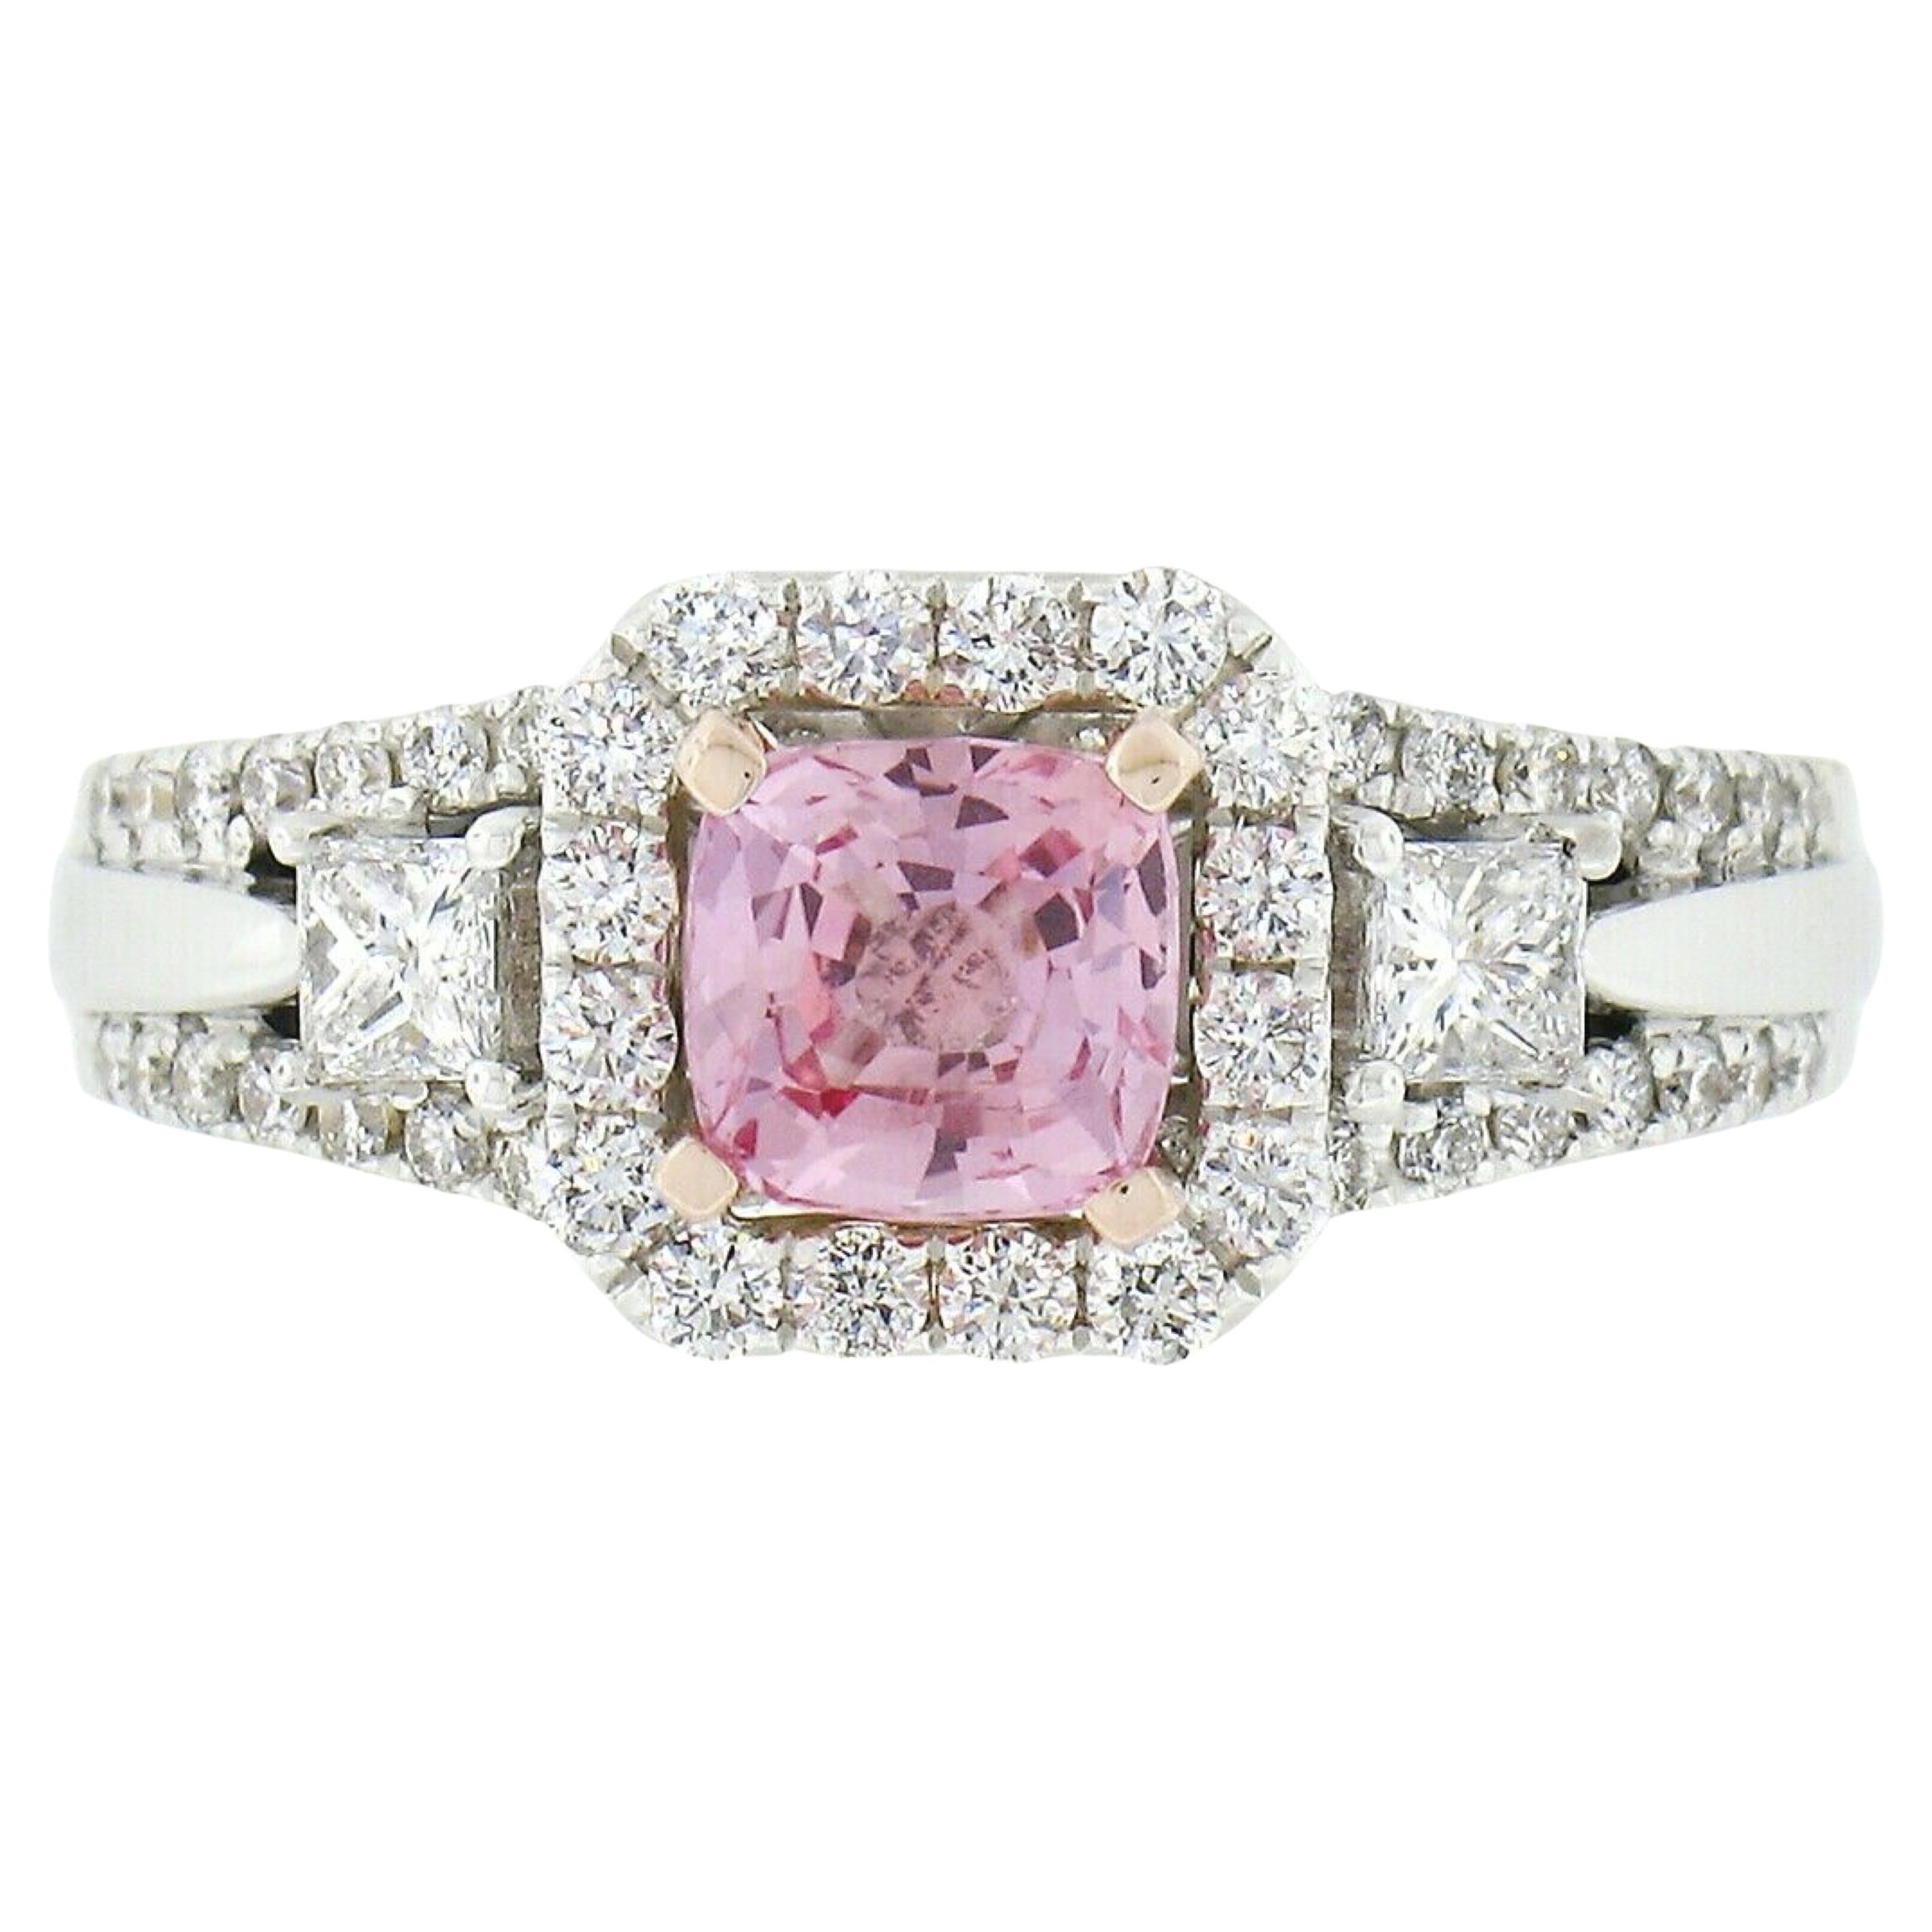 New 14k White Gold 1.55ctw No Heat Pink Cushion Sapphire Diamond Engagement Ring